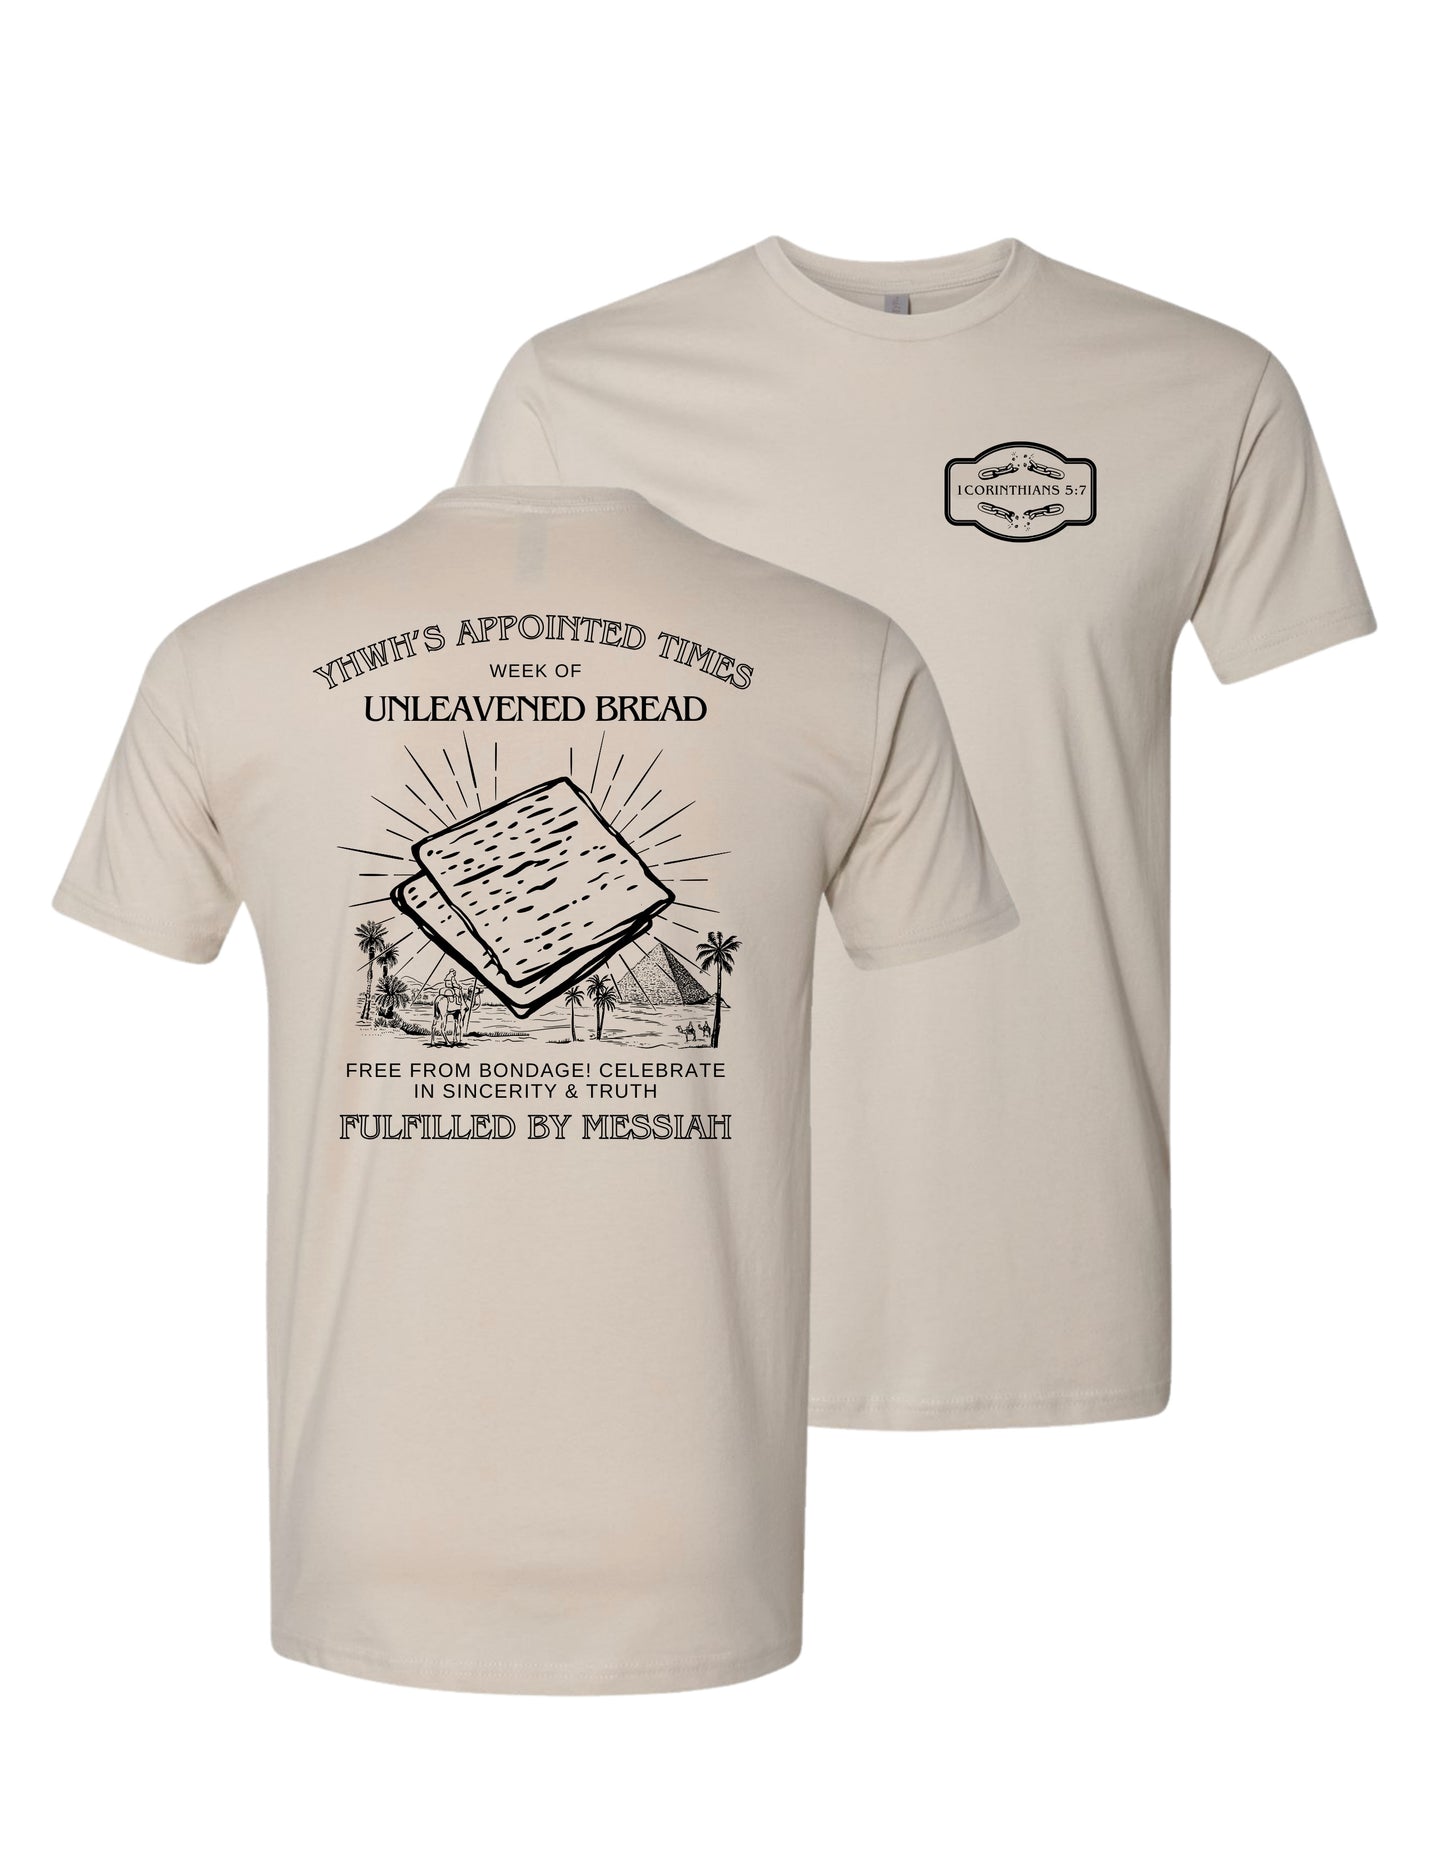 Unleavened Bread T-Shirt